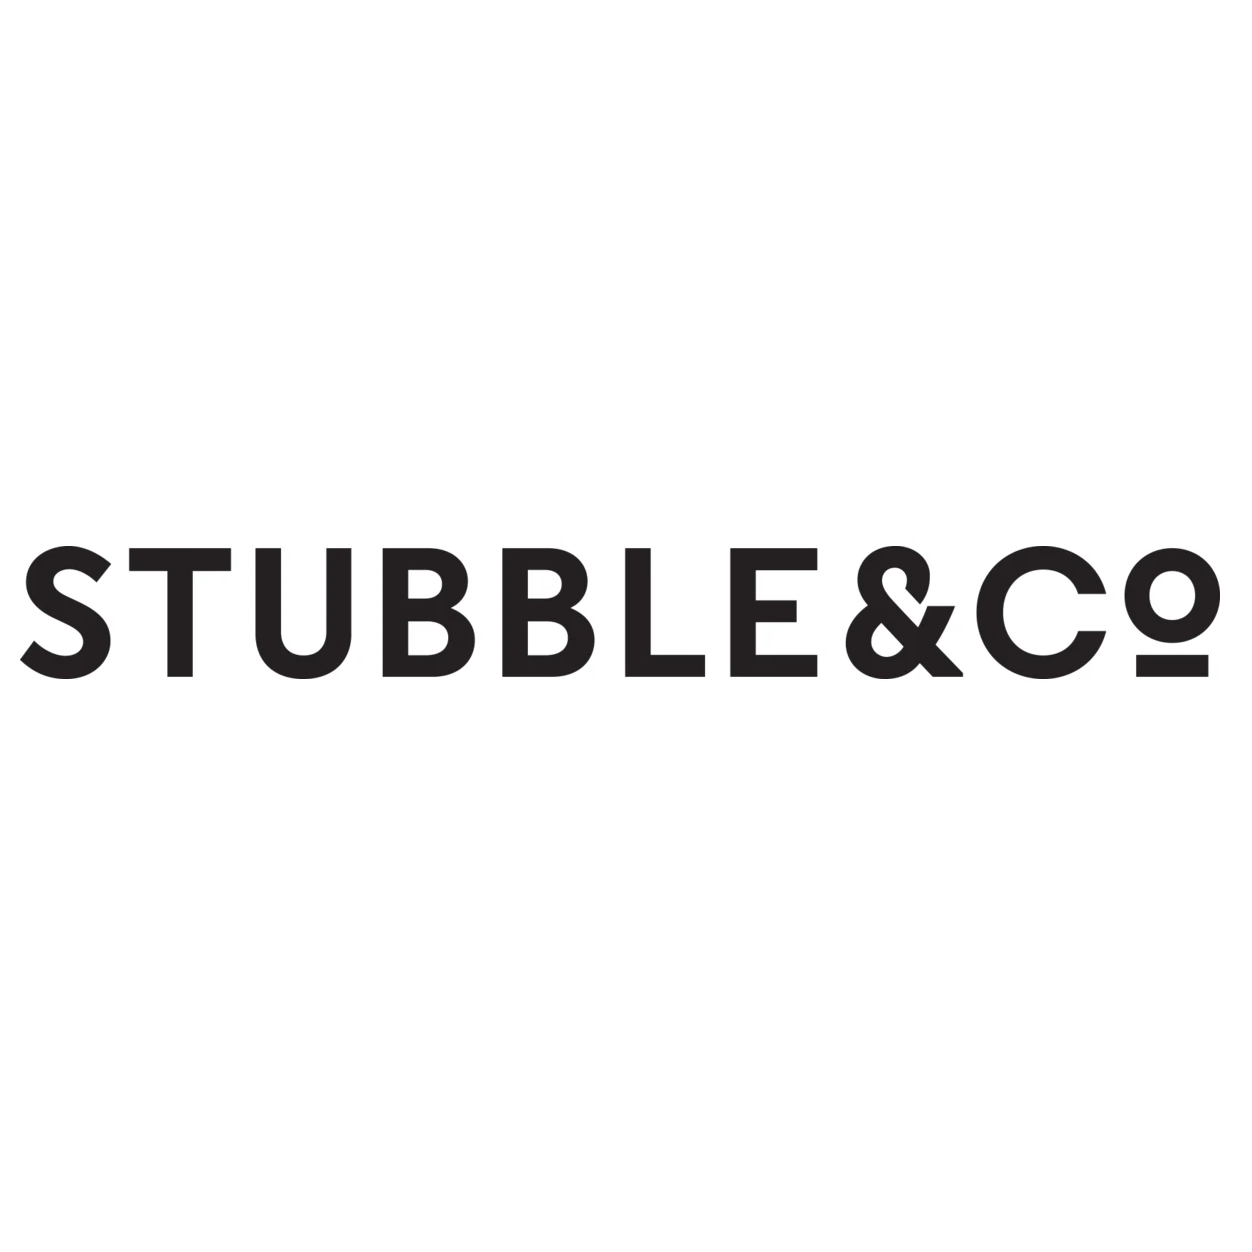 Stubble & Co brand logo